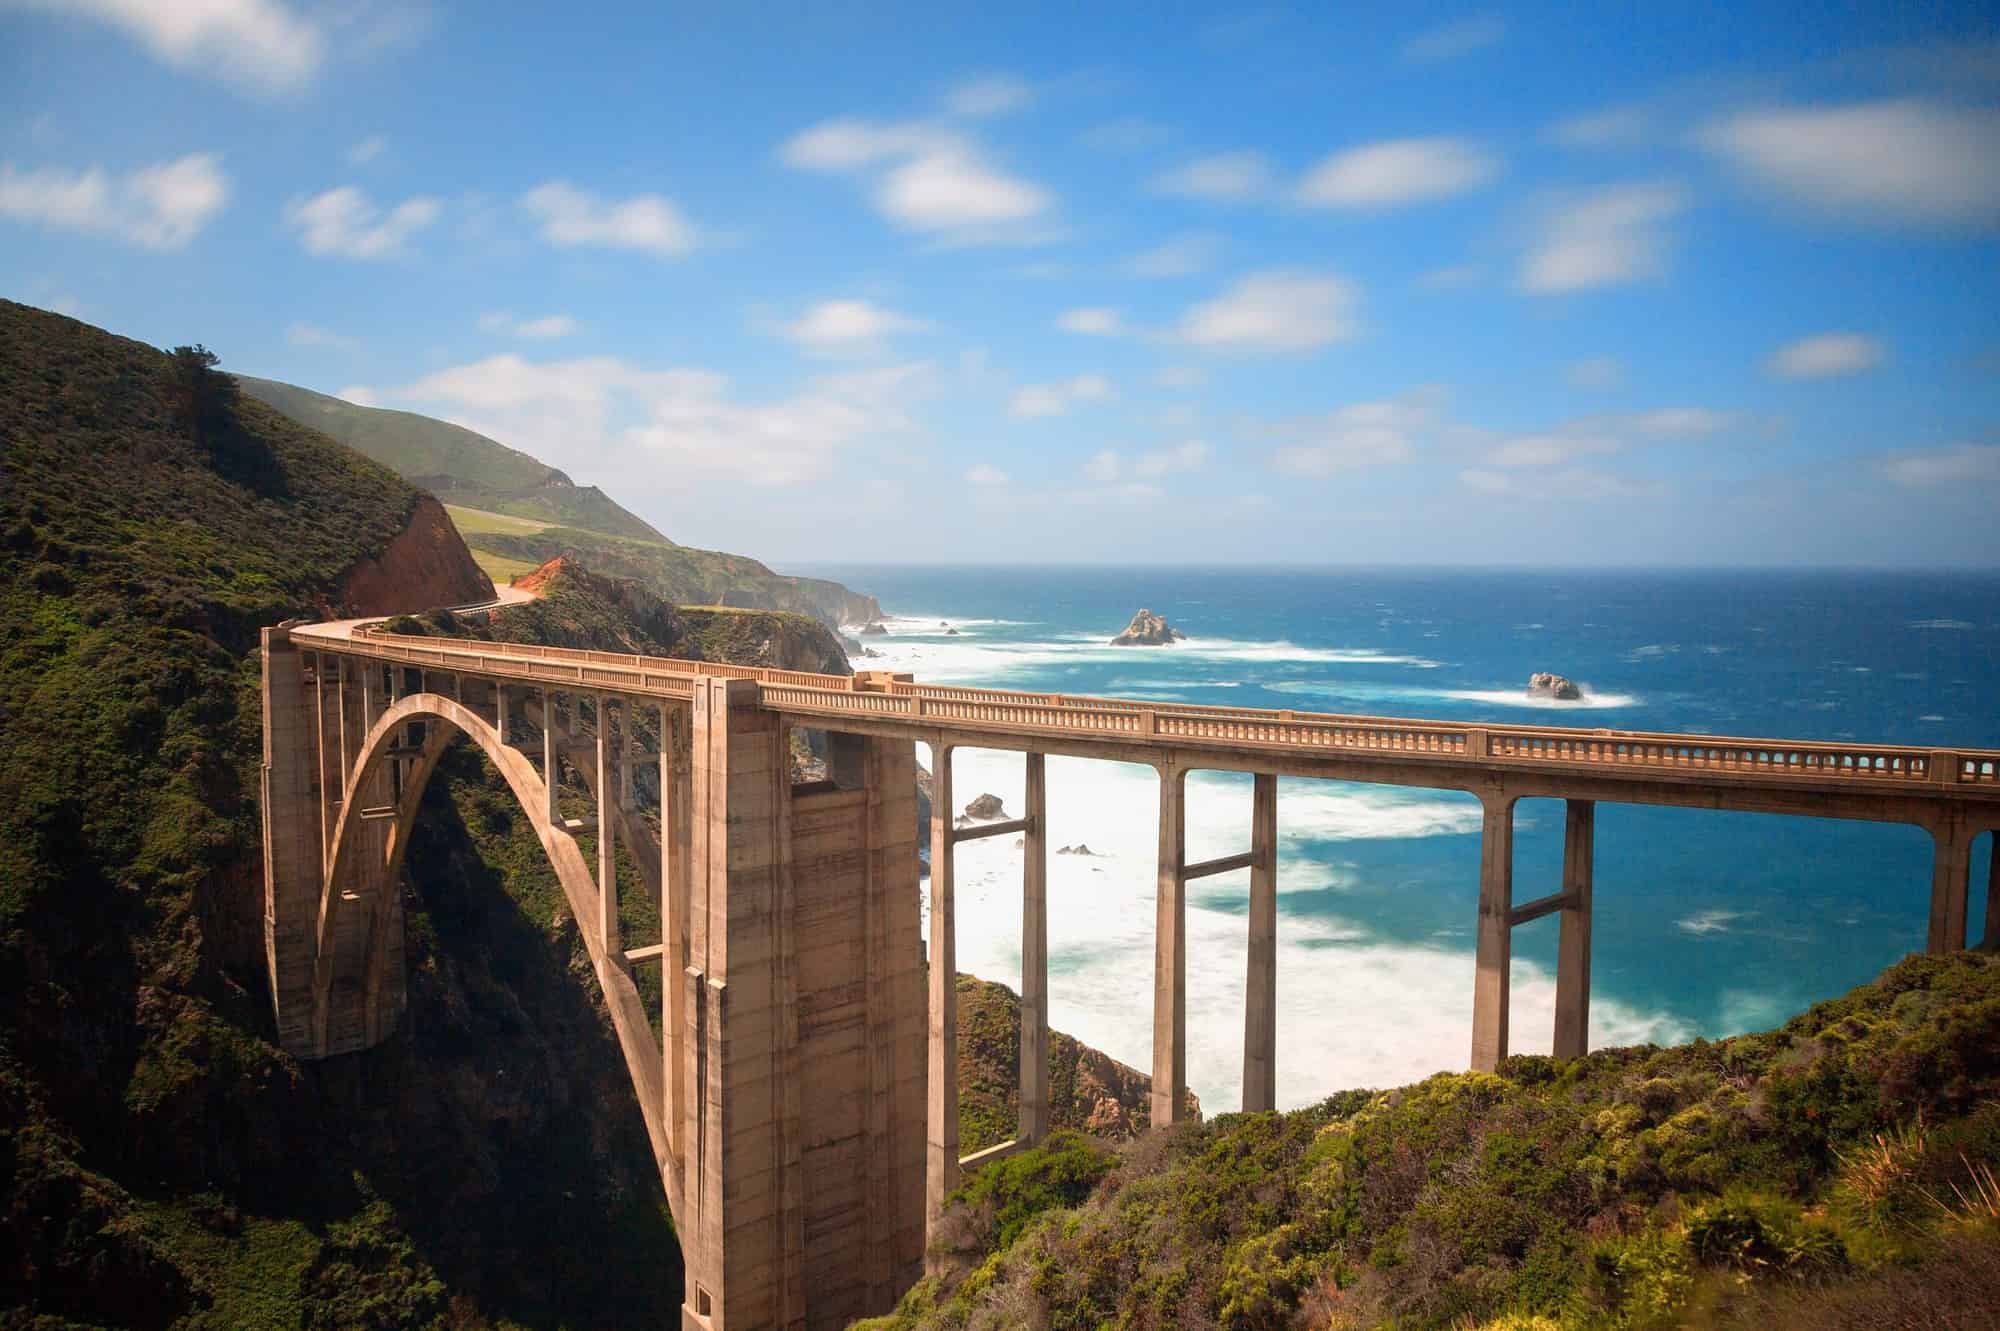 Ocean drive - tall bridge connecting a canyon